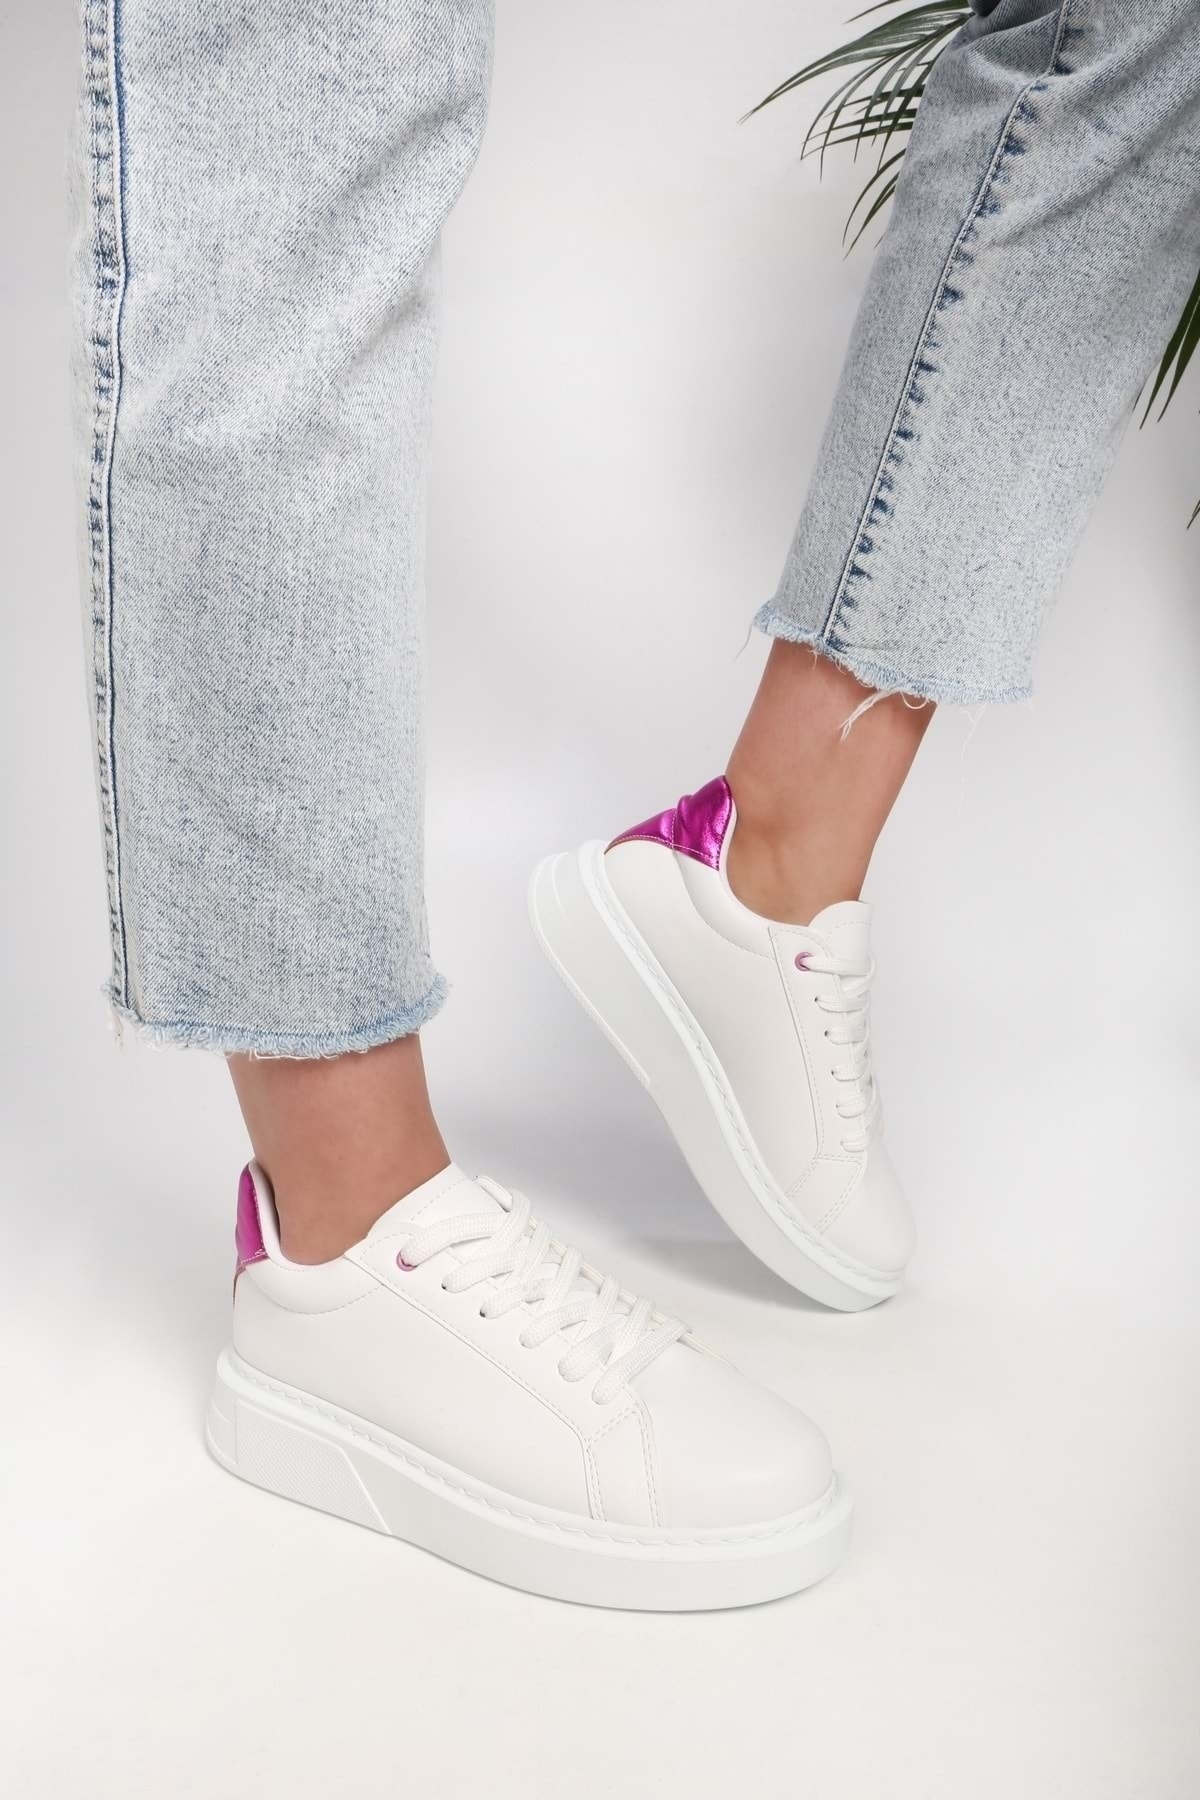 Shoeberry Women's Vixon White Fuchsia Sneaker Sports Casual Shoes